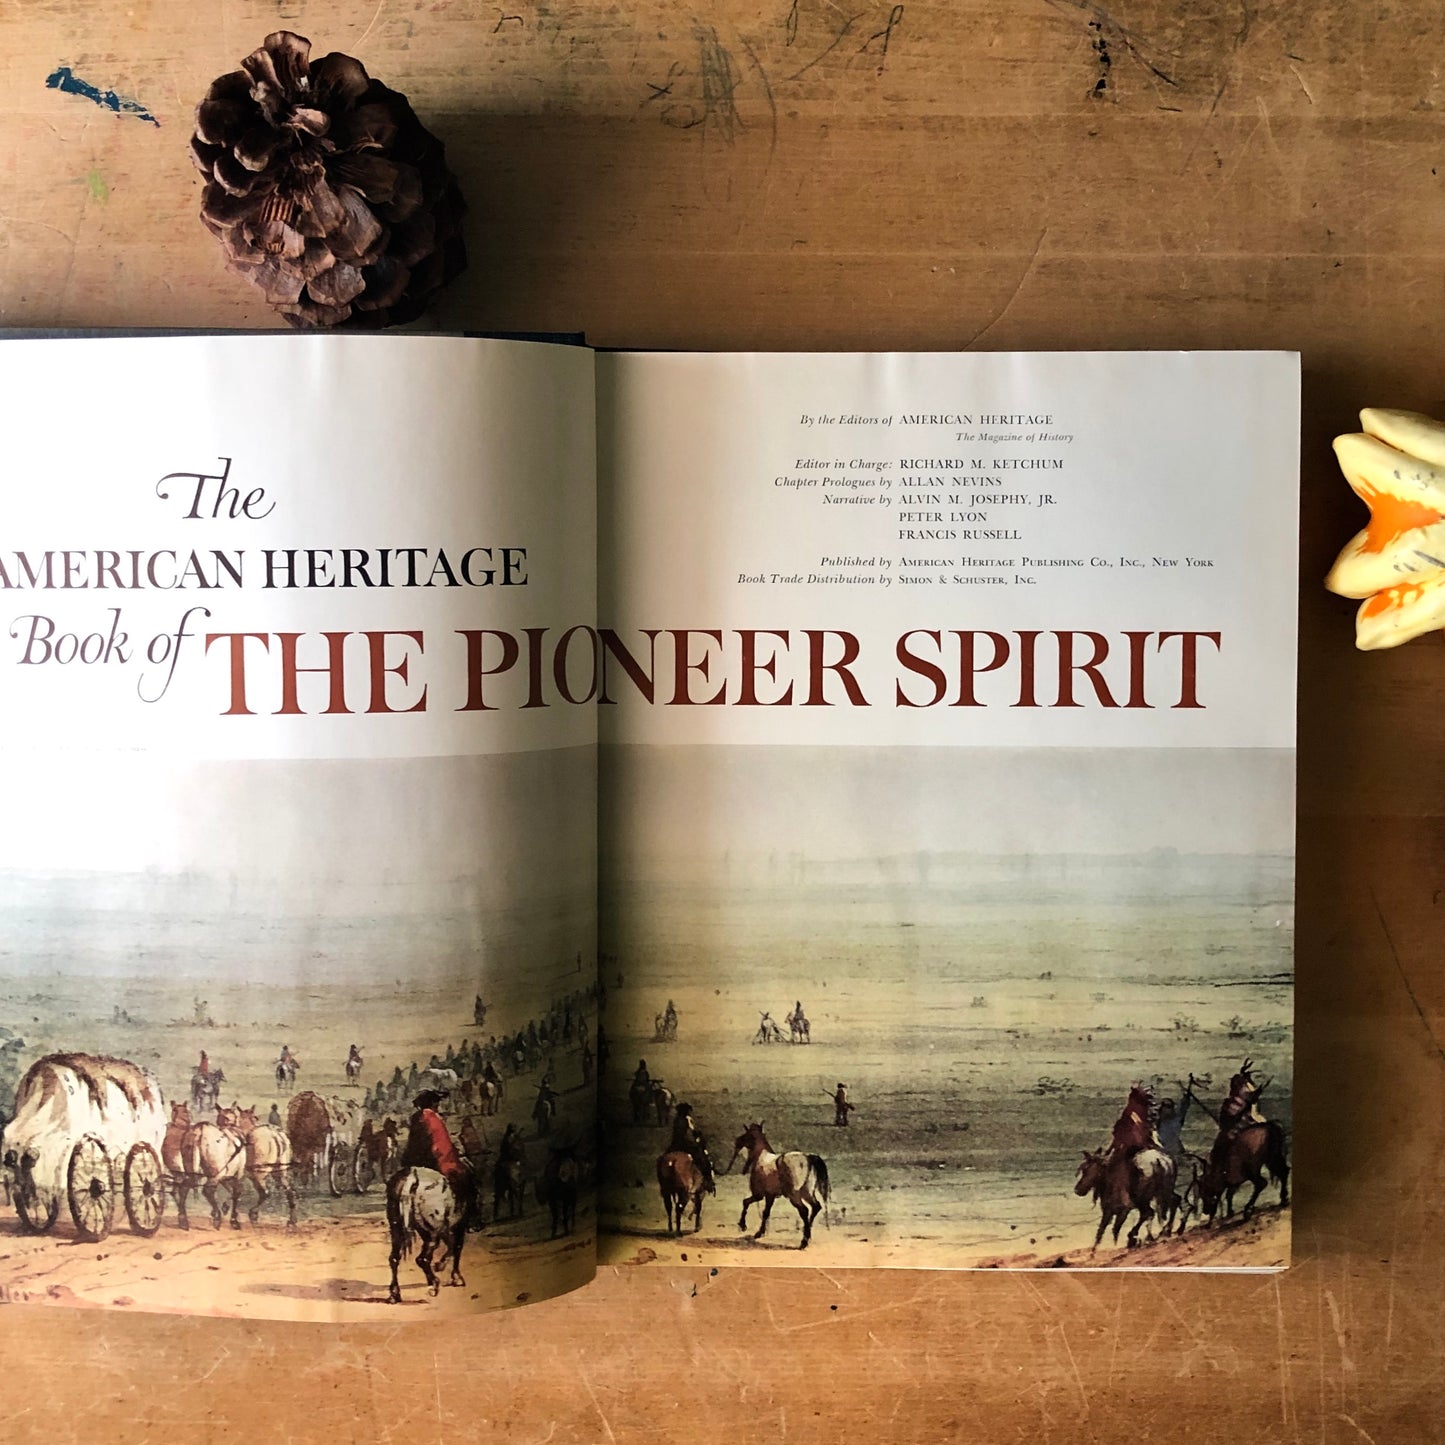 The American Heritage Book of The Pioneer Spirit (1959)